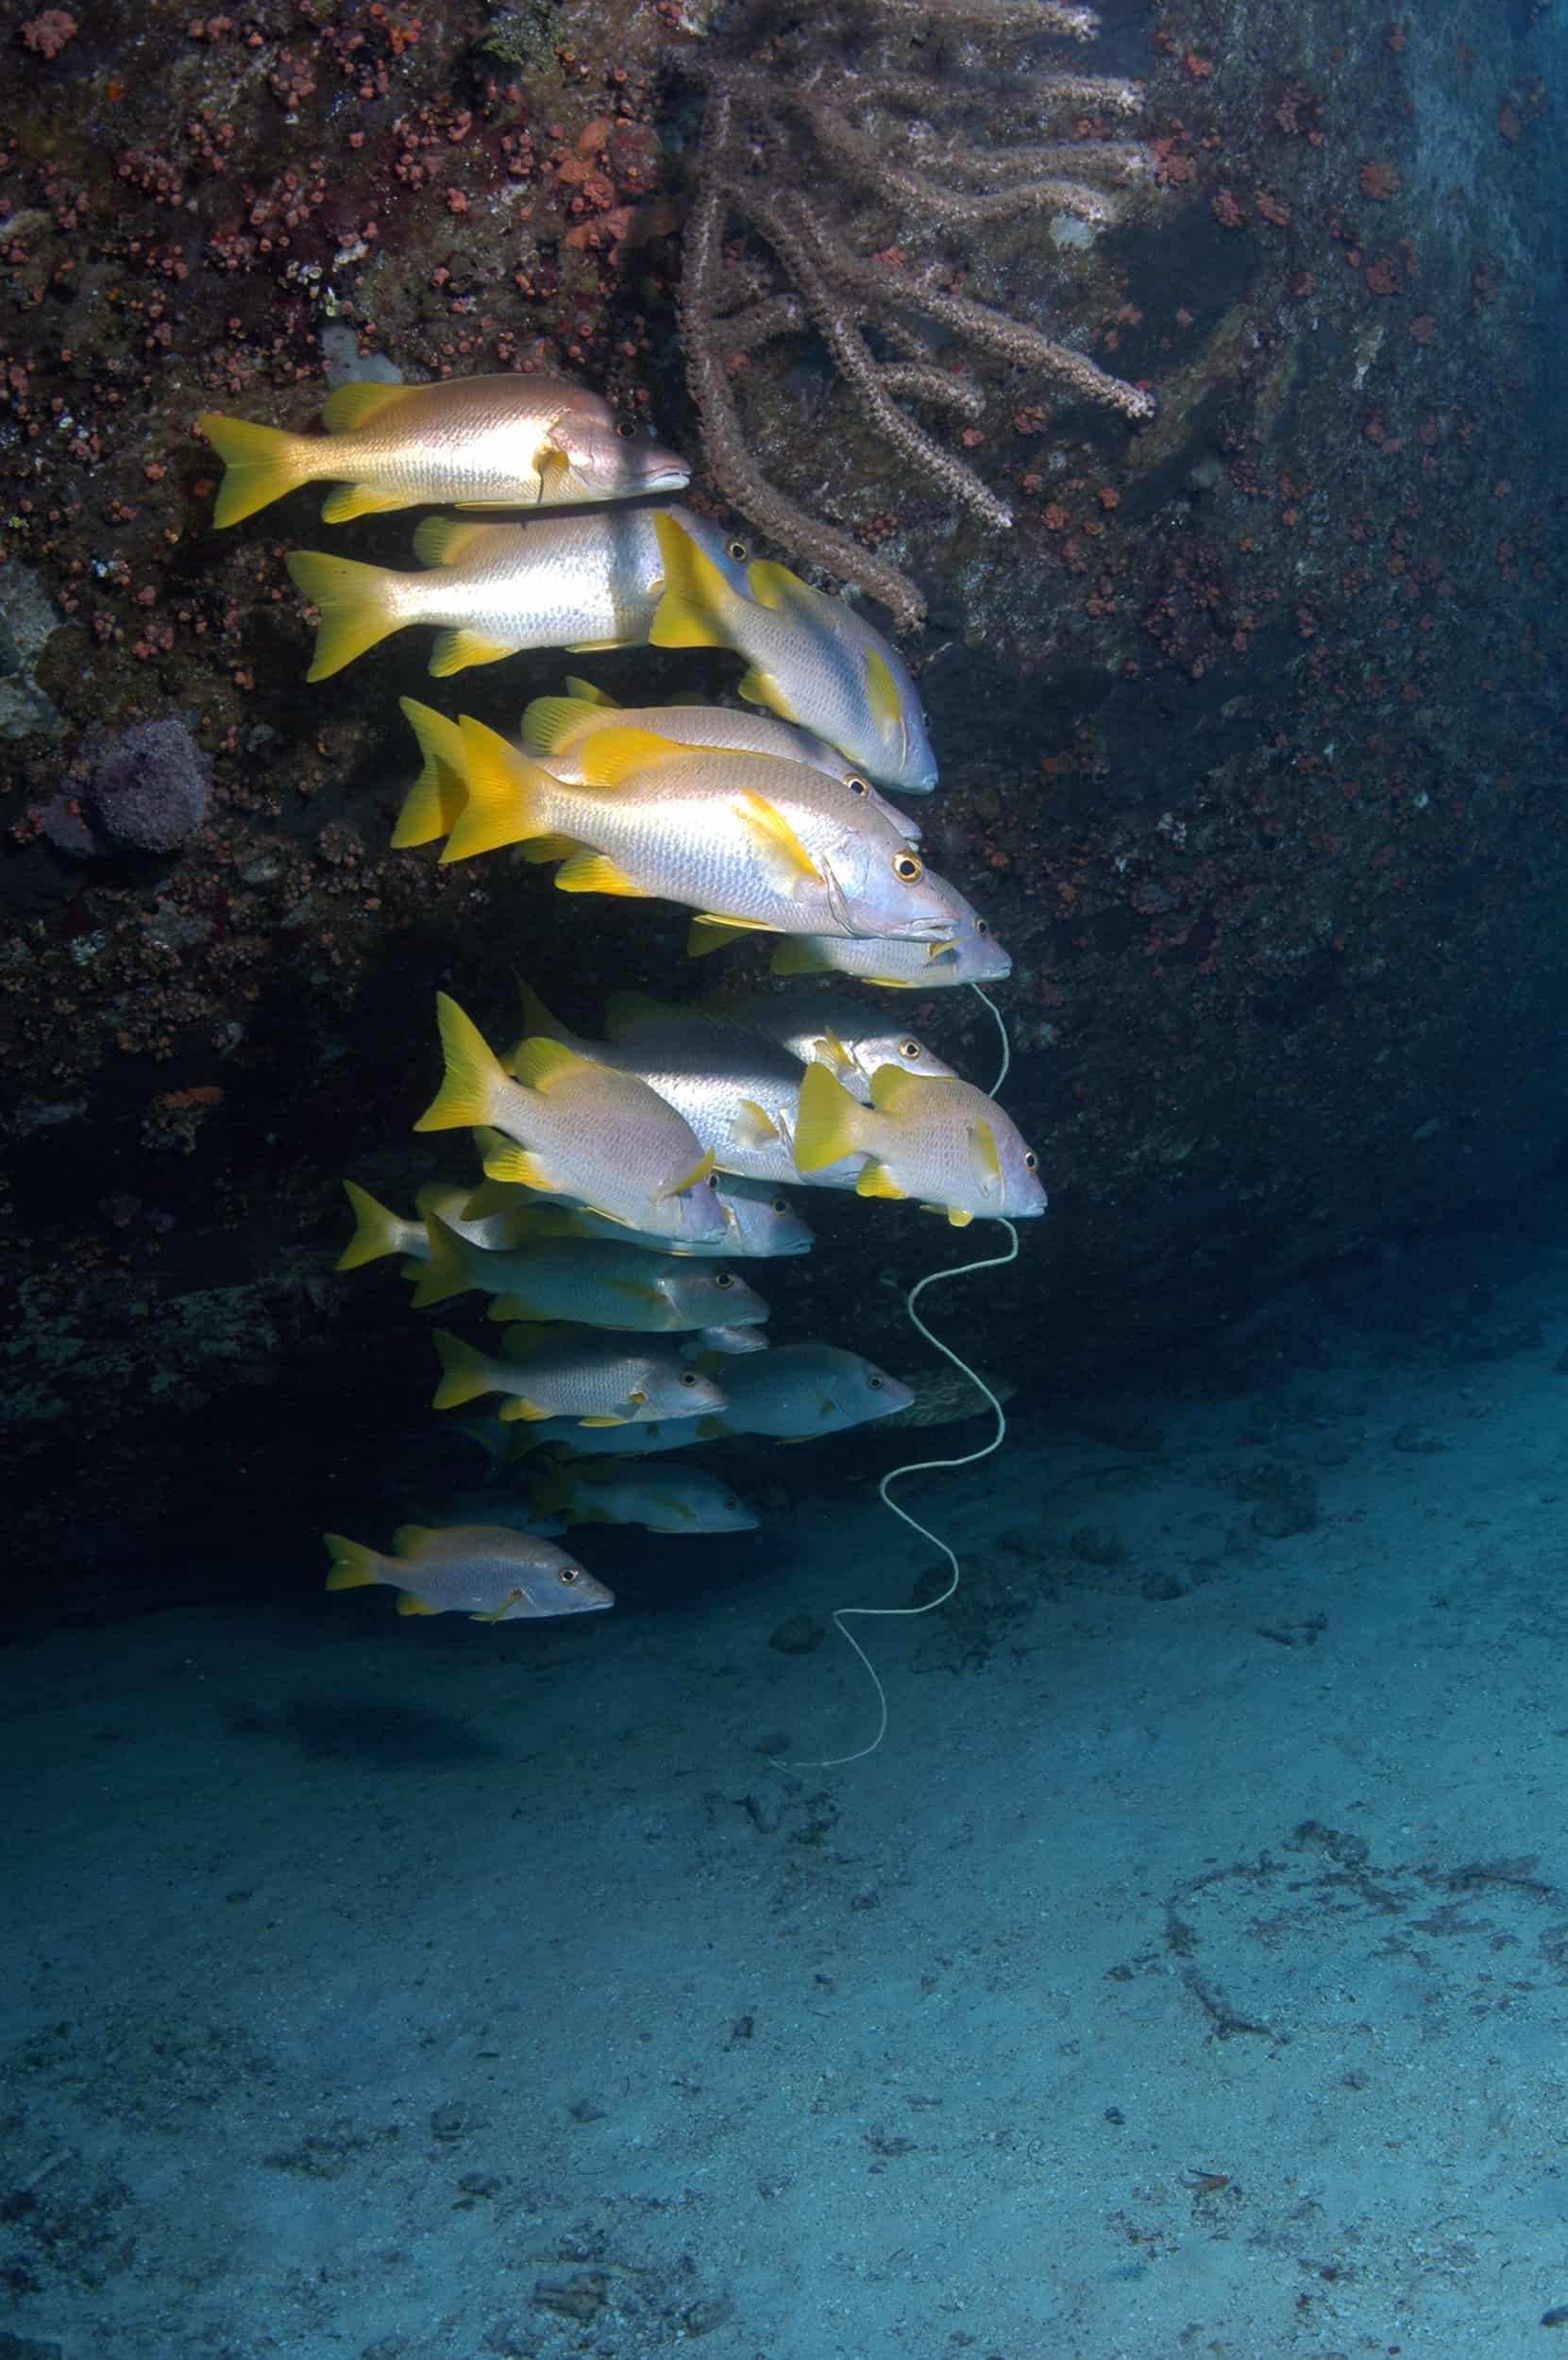 Nassau Ultimate Snorkeling Reef and Fish